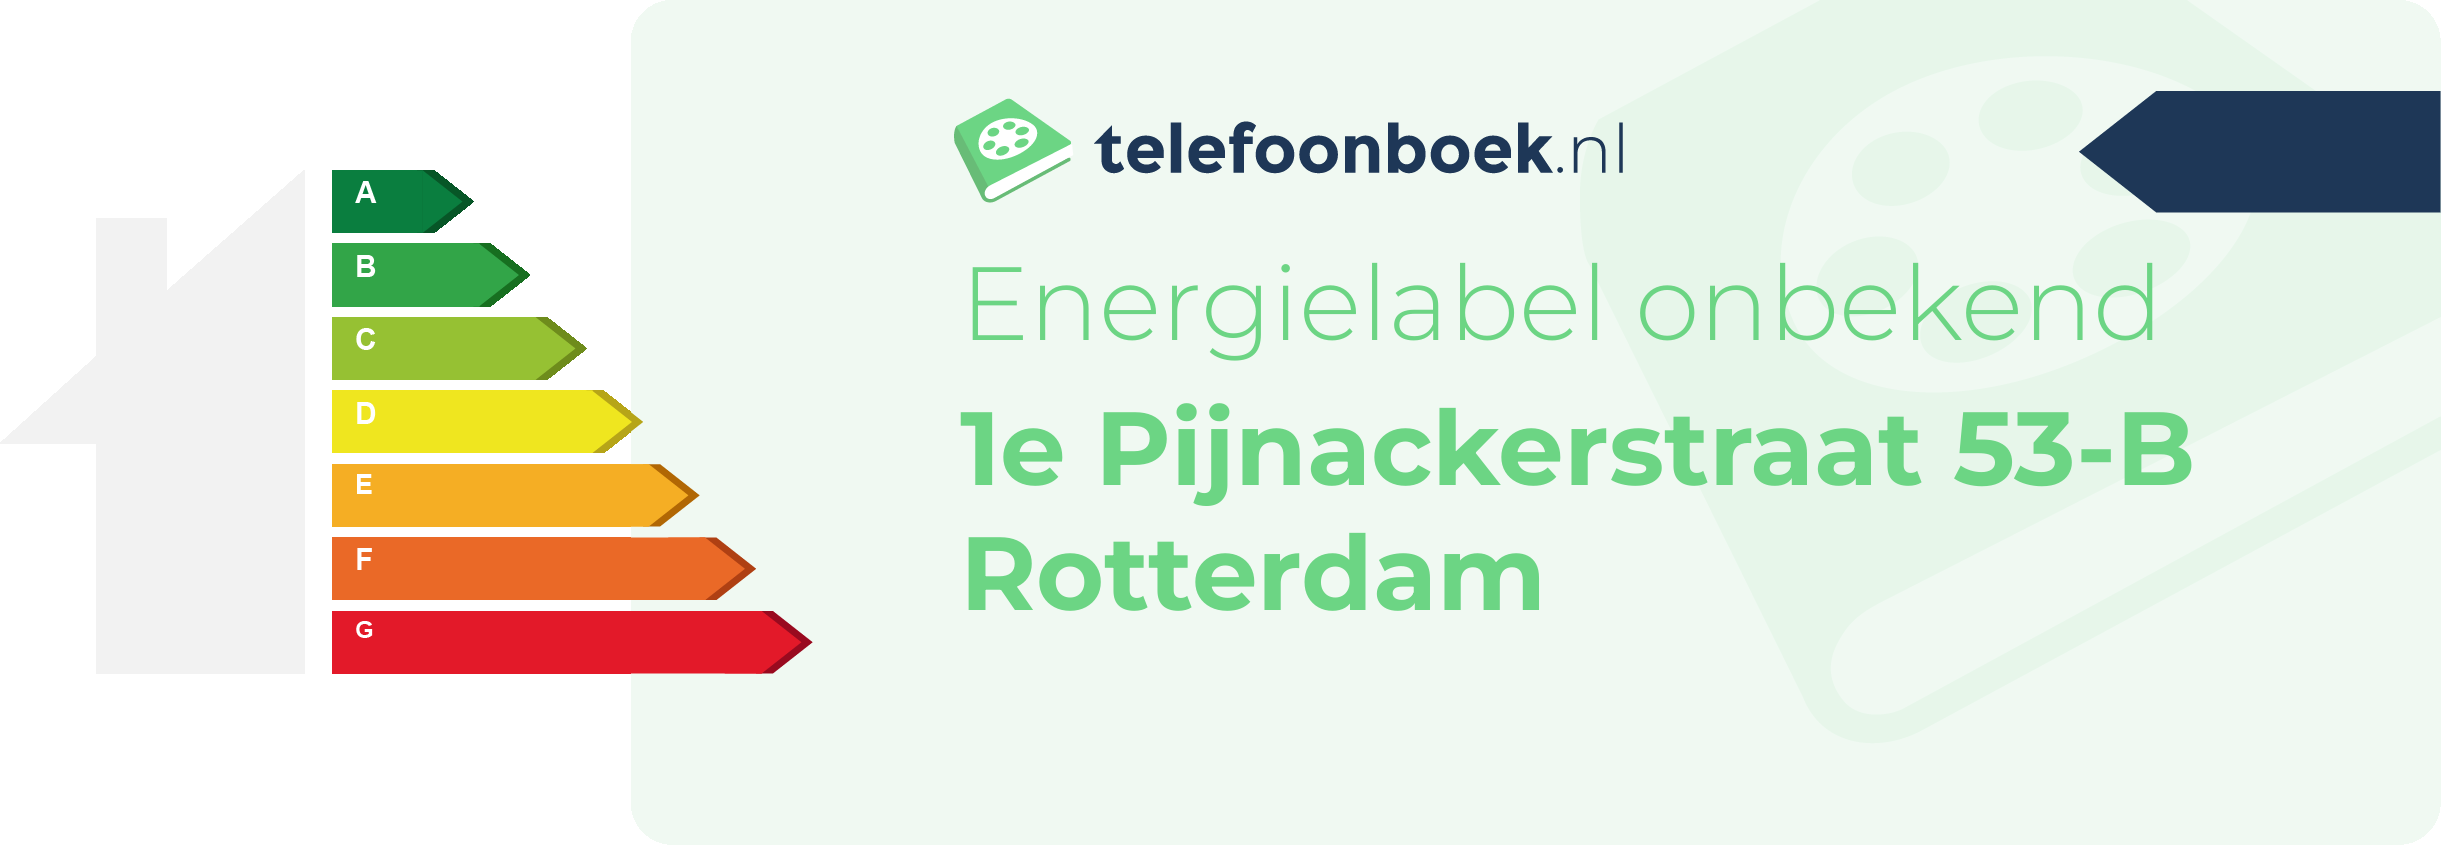 Energielabel 1e Pijnackerstraat 53-B Rotterdam